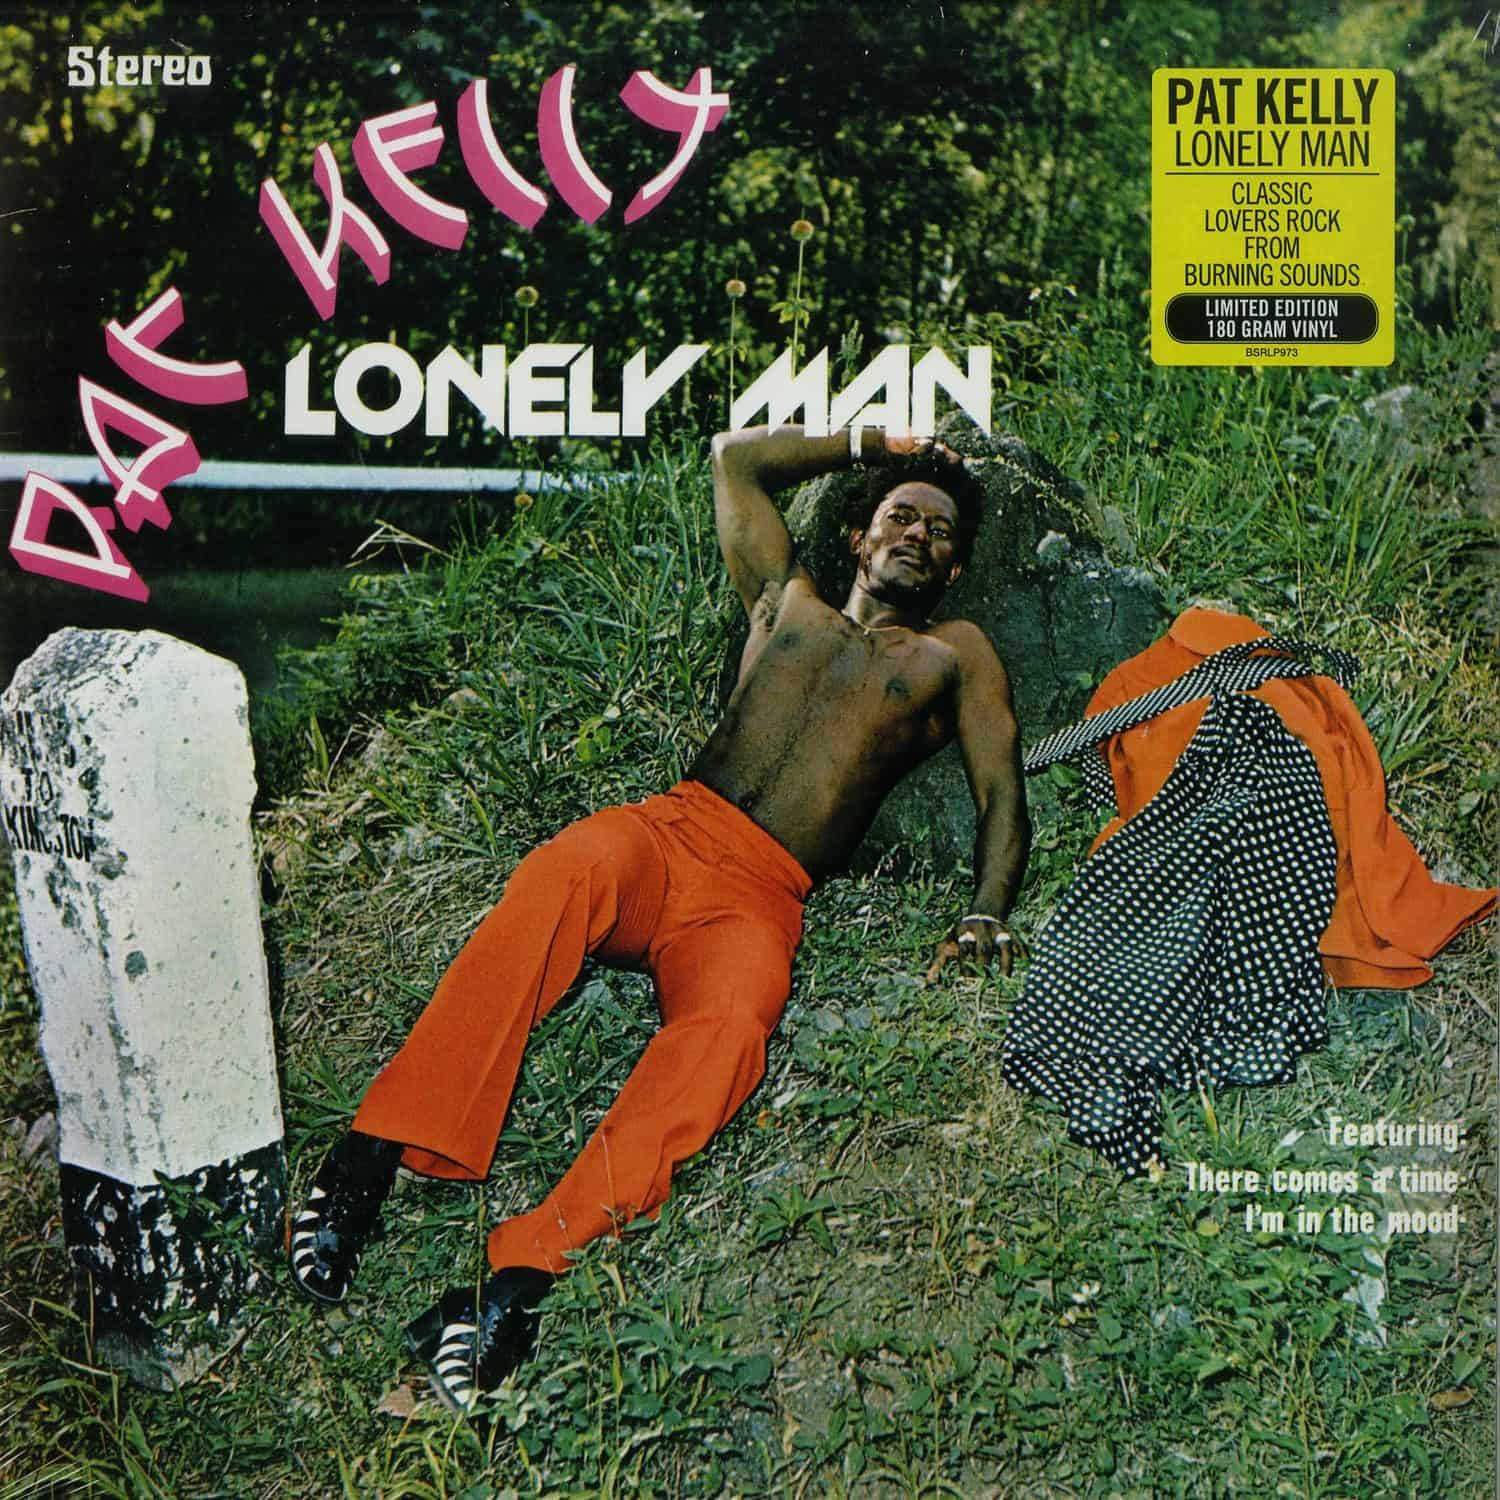 Pat Kelly - LONELY MAN 